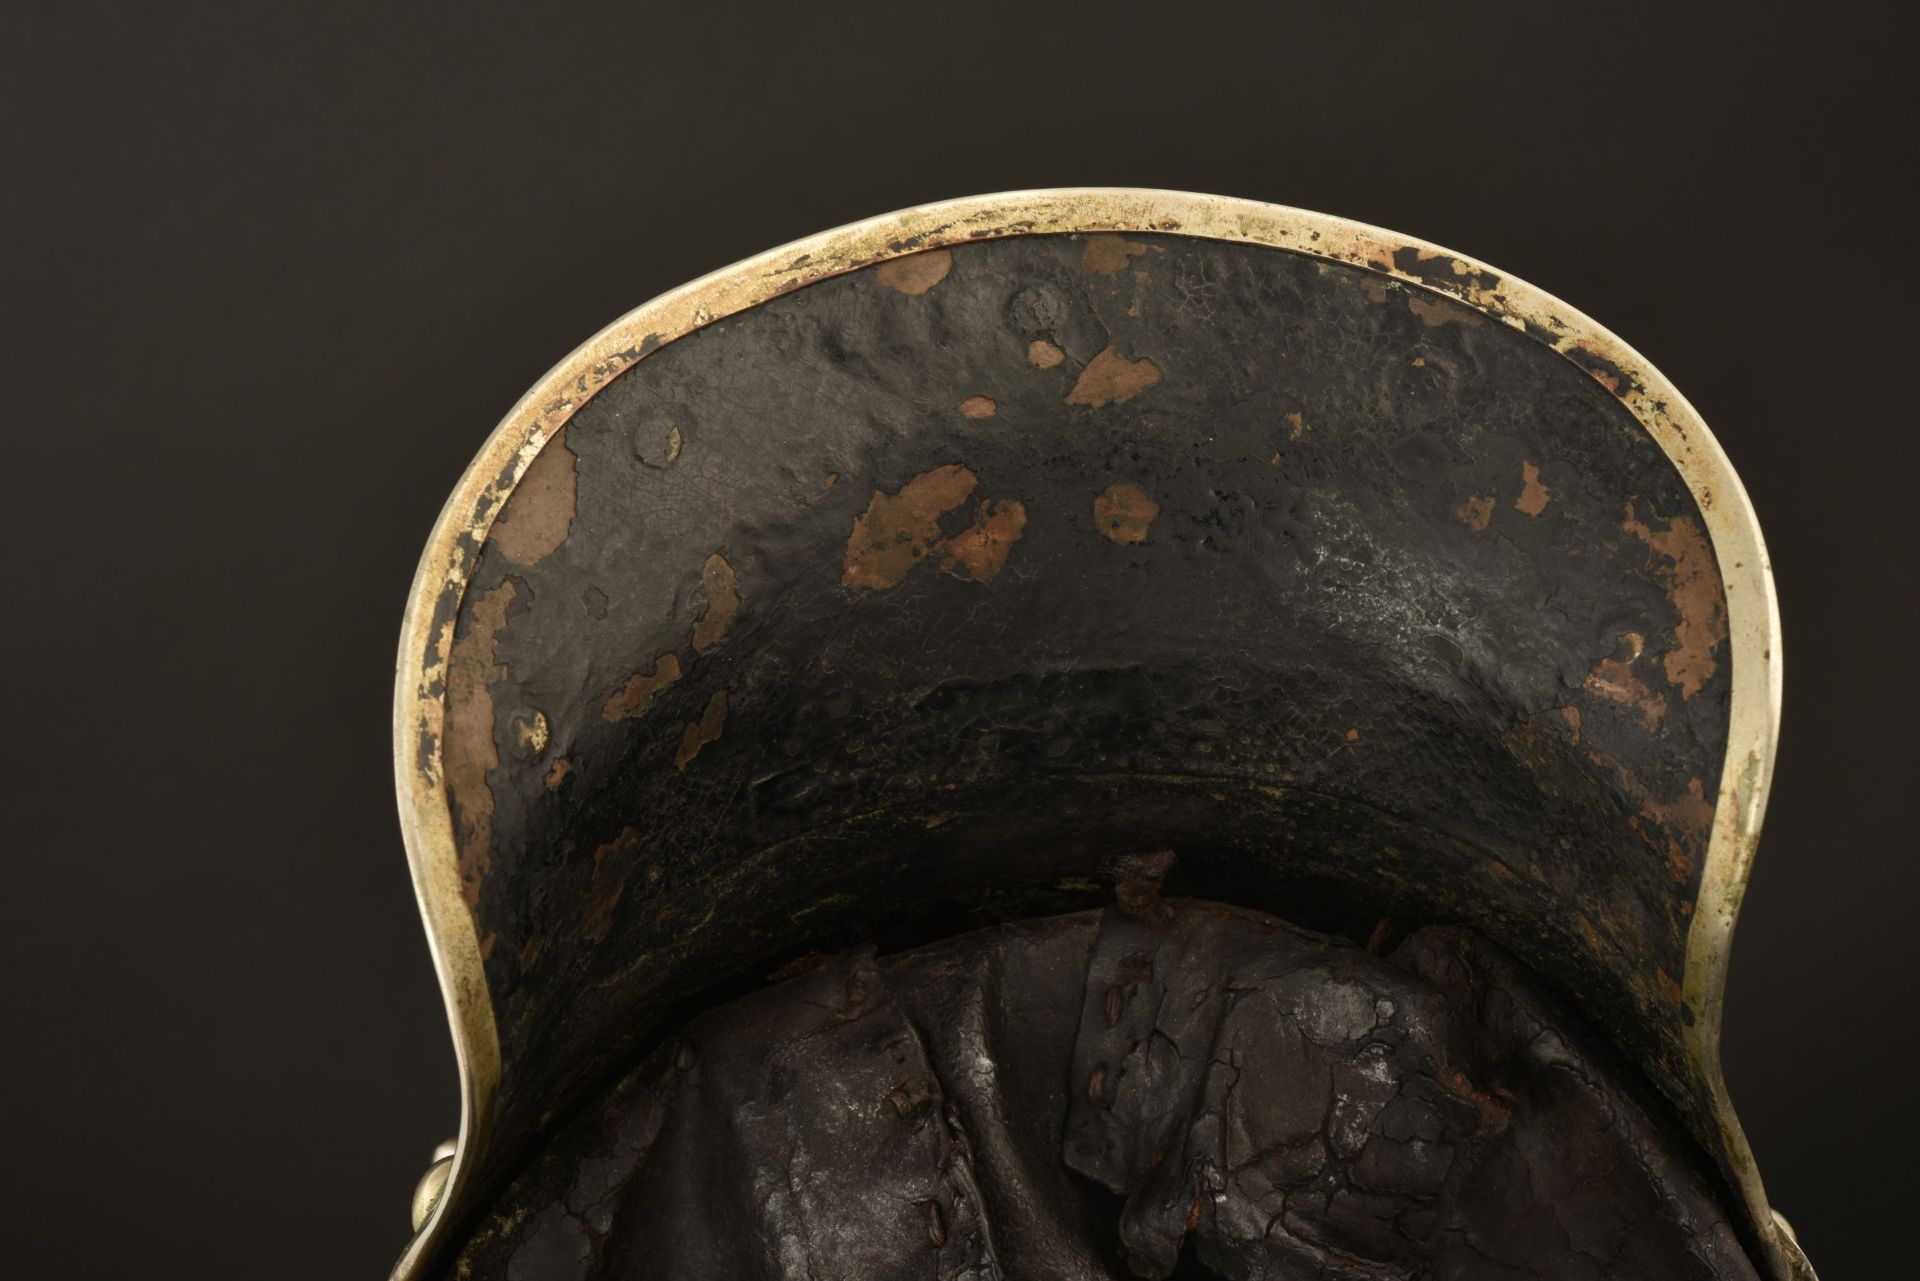 Casque de Garde Kurassier modele 1889 en grande tenue. Guard Cuirassier spiked helmet with parade ea - Image 4 of 5